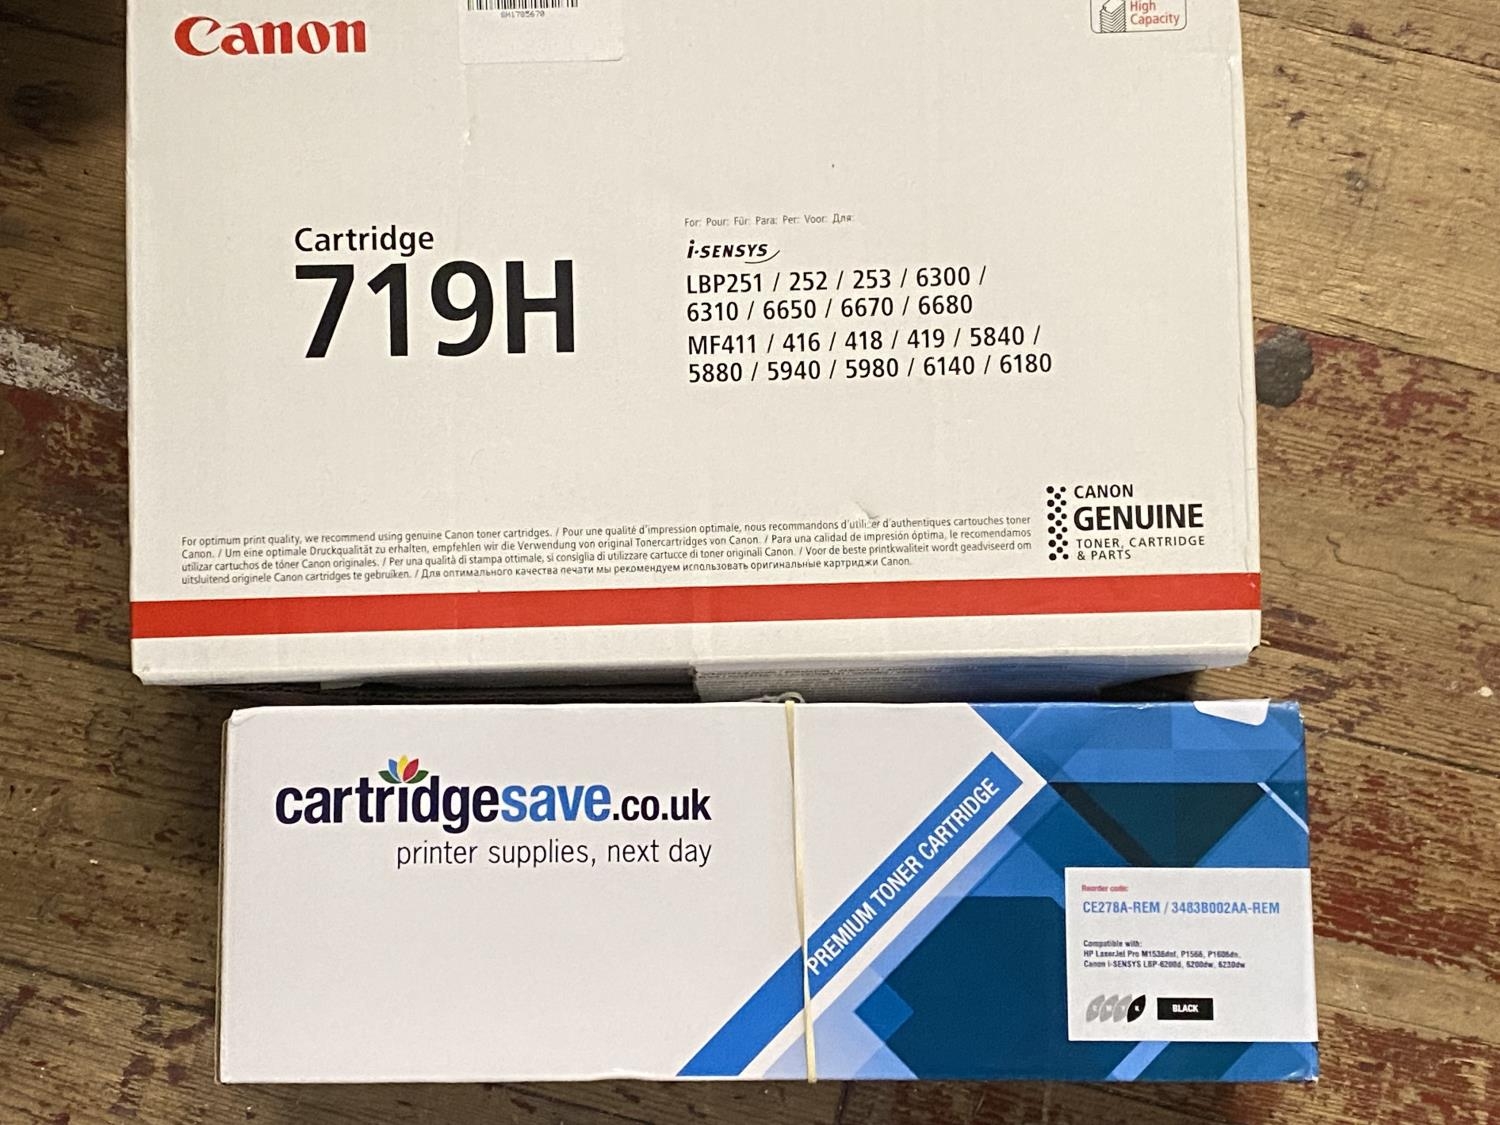 Two boxed printer cartridges